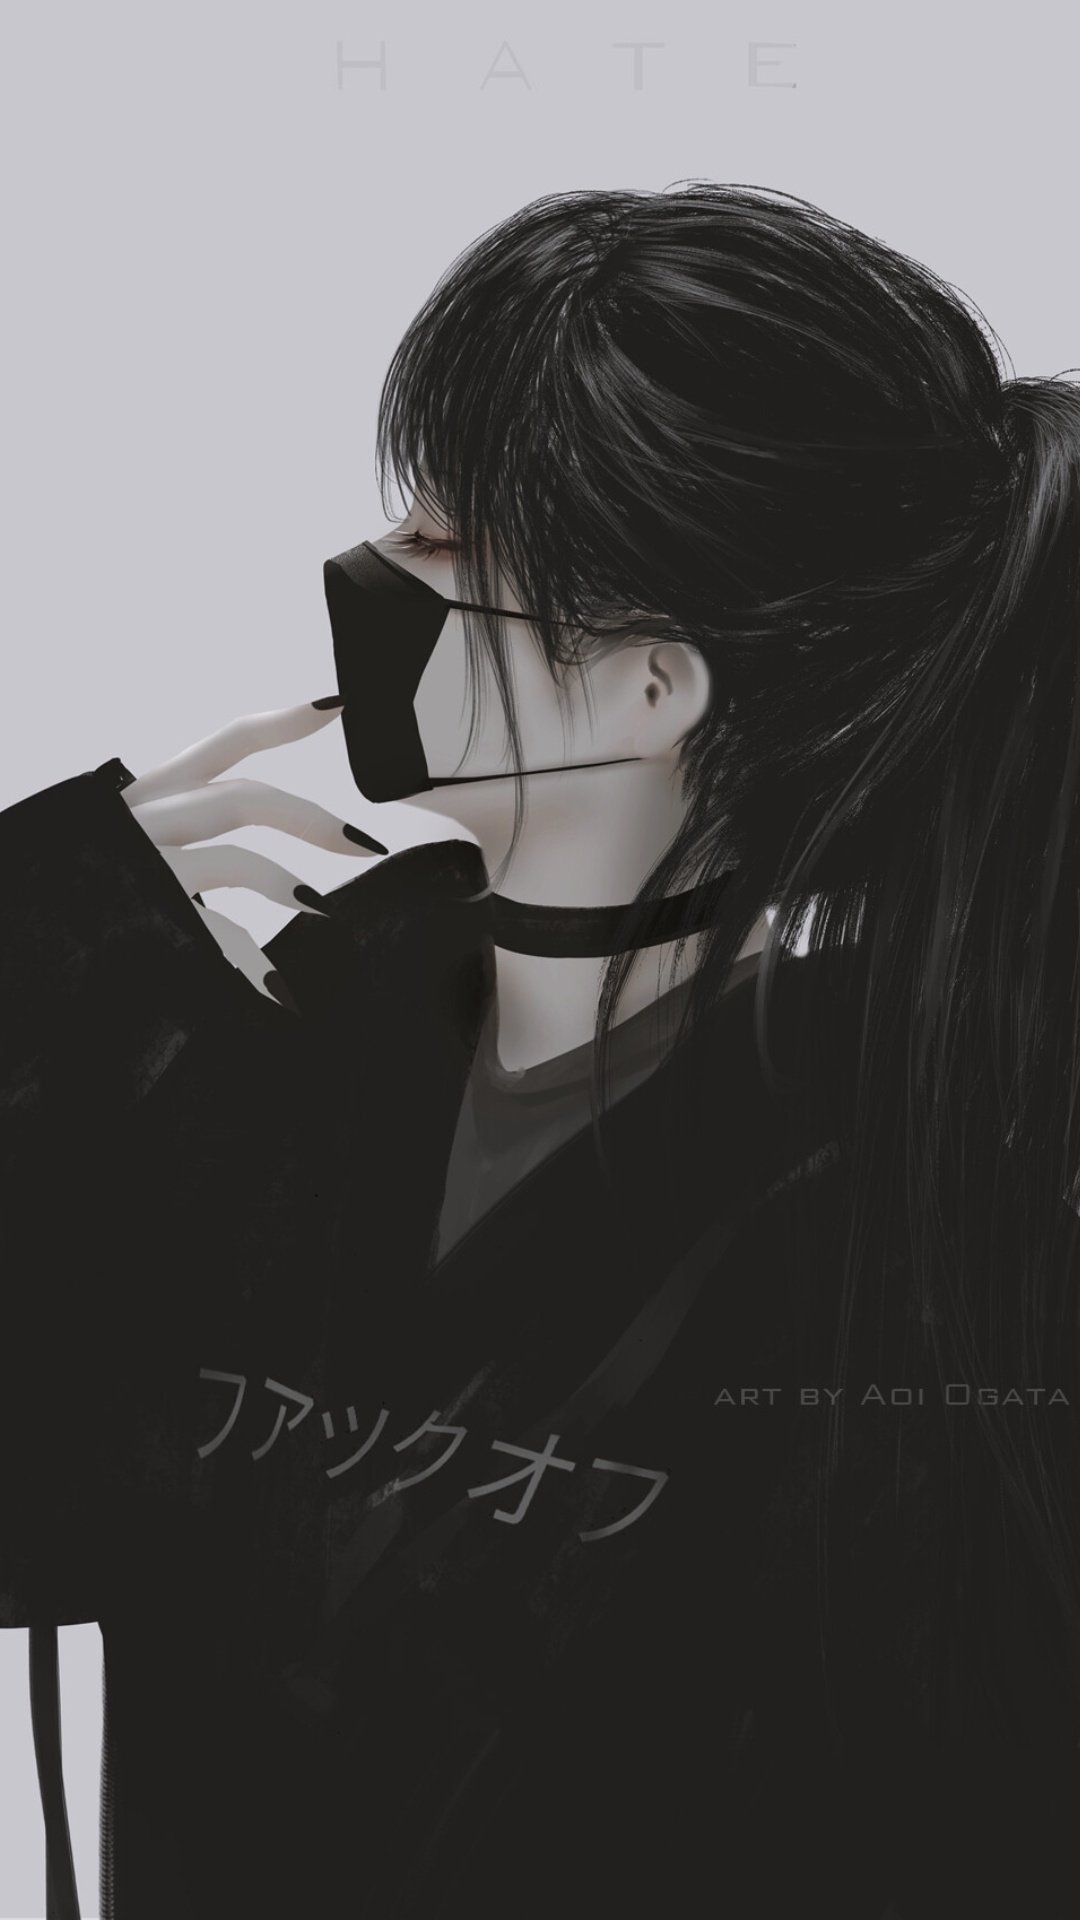 Aesthetic dark anime girl Wallpapers Download